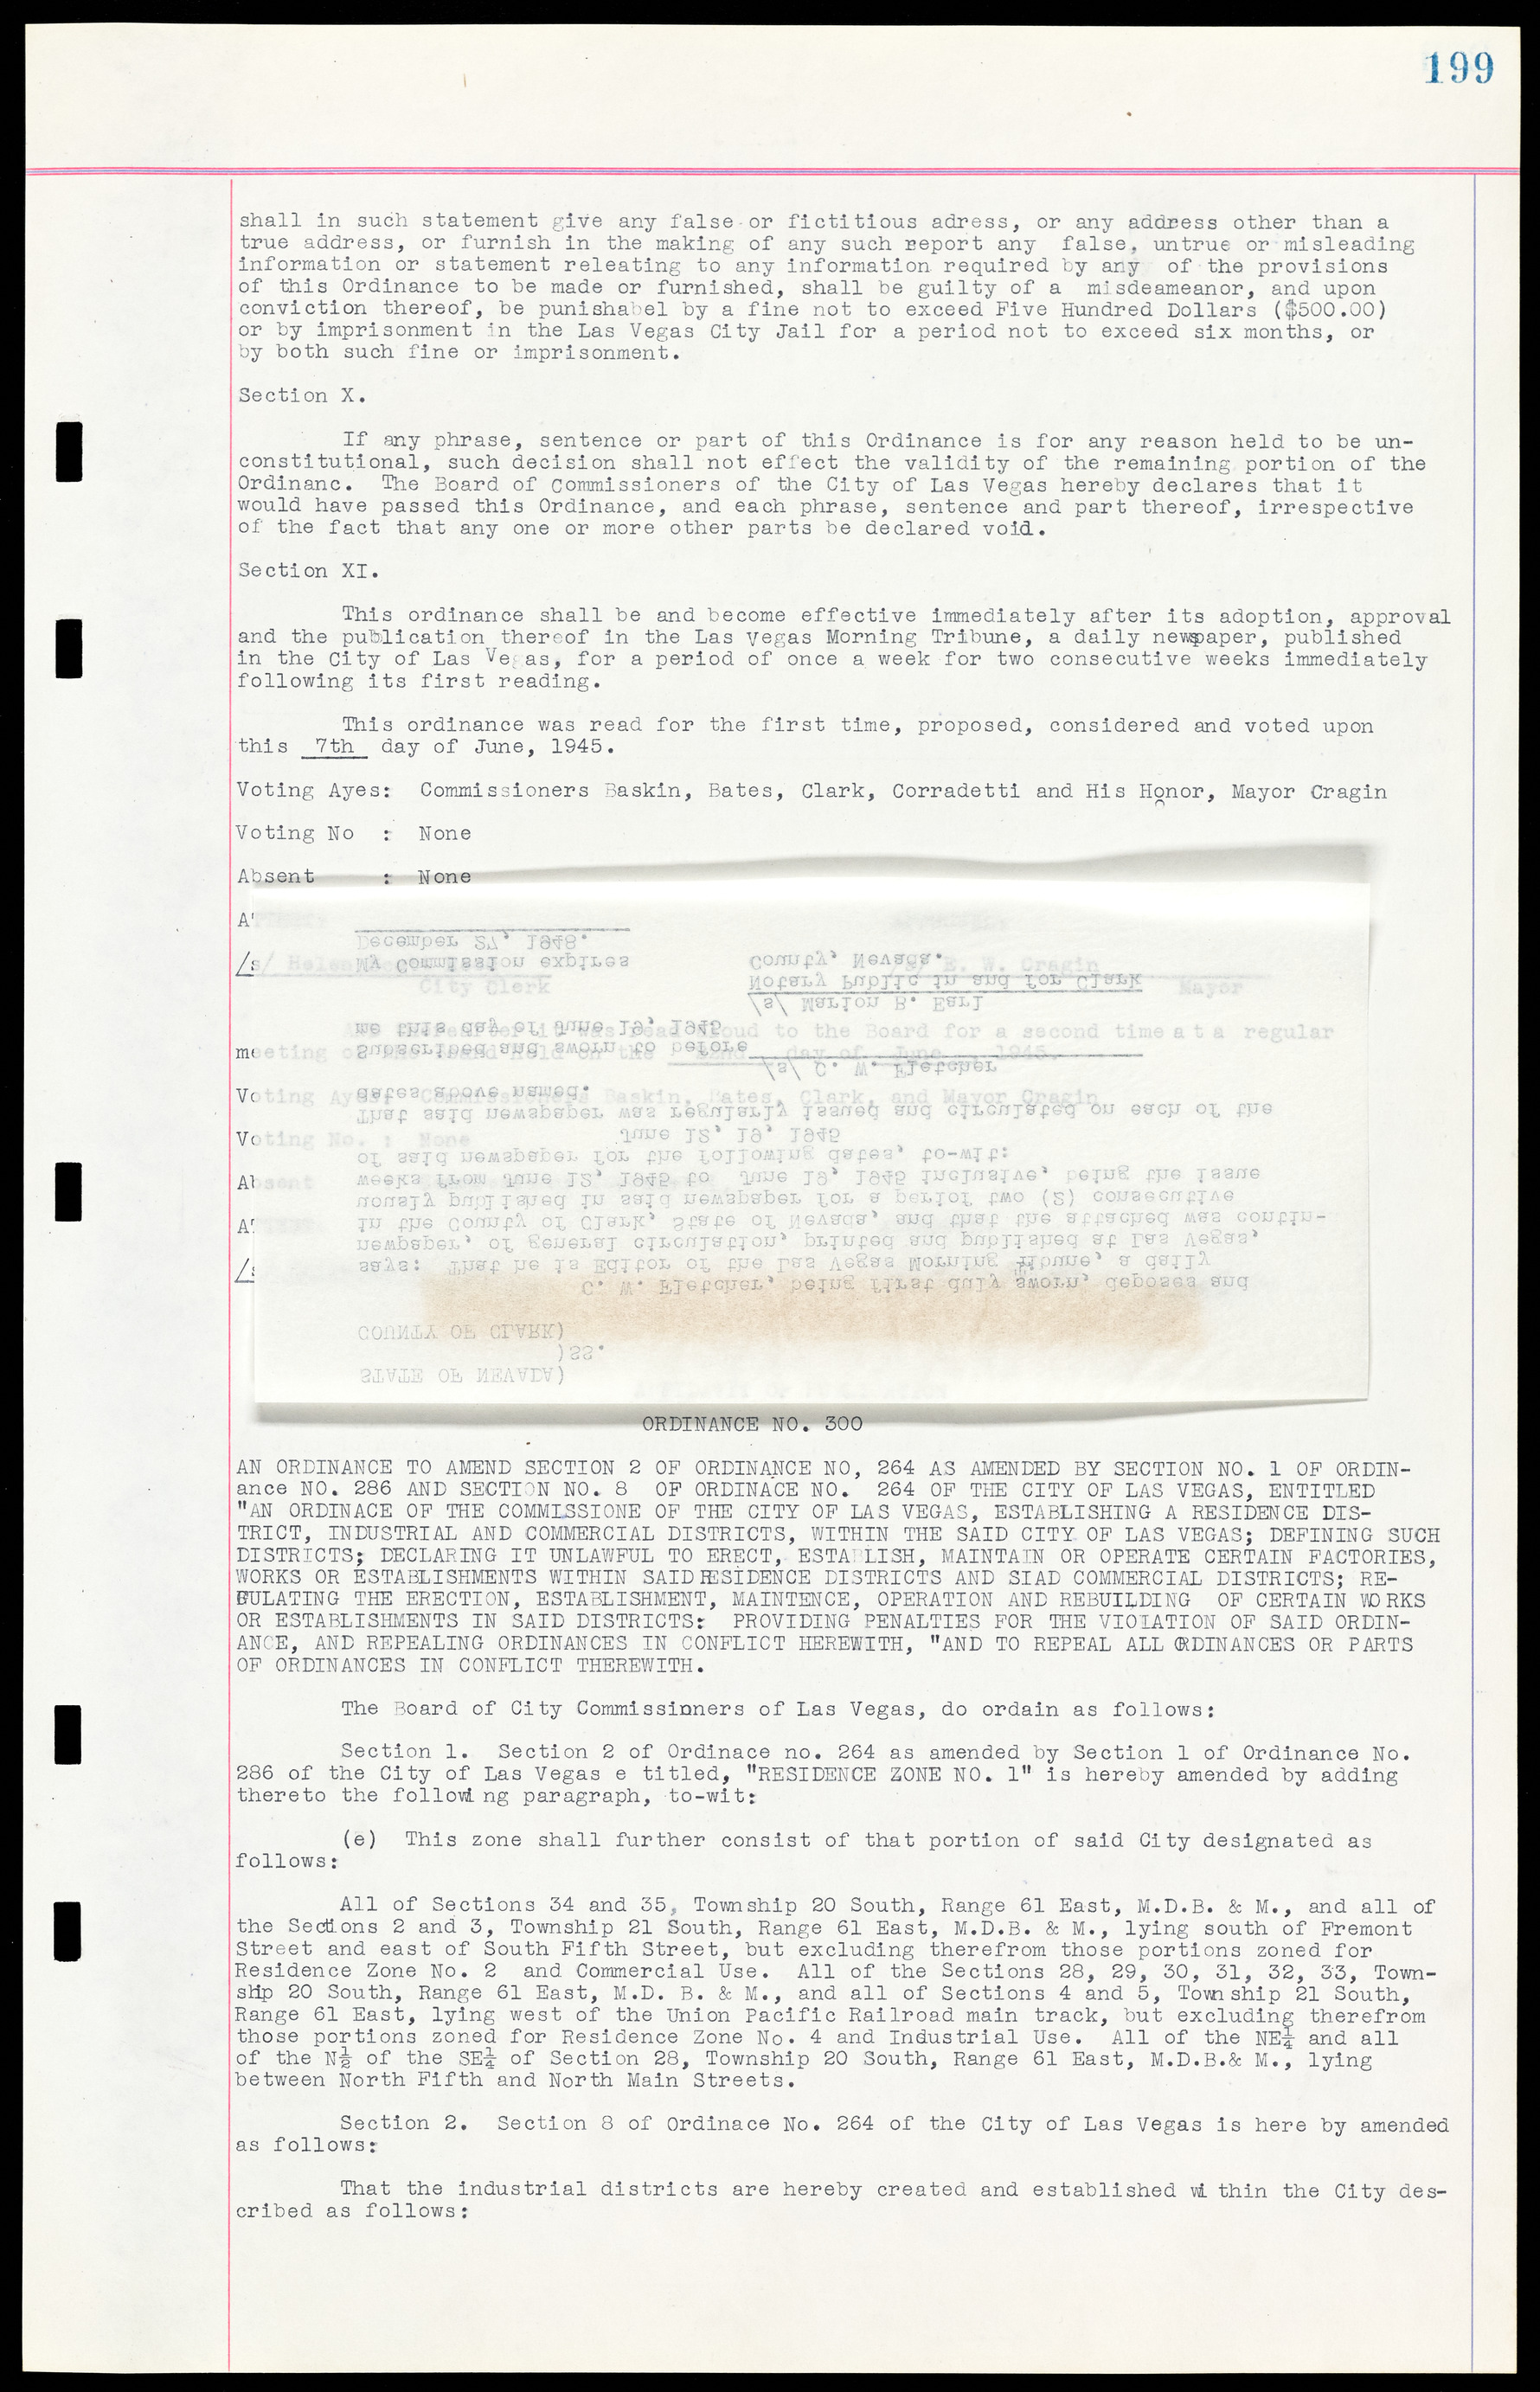 Las Vegas City Ordinances, March 31, 1933 to October 25, 1950, lvc000014-228